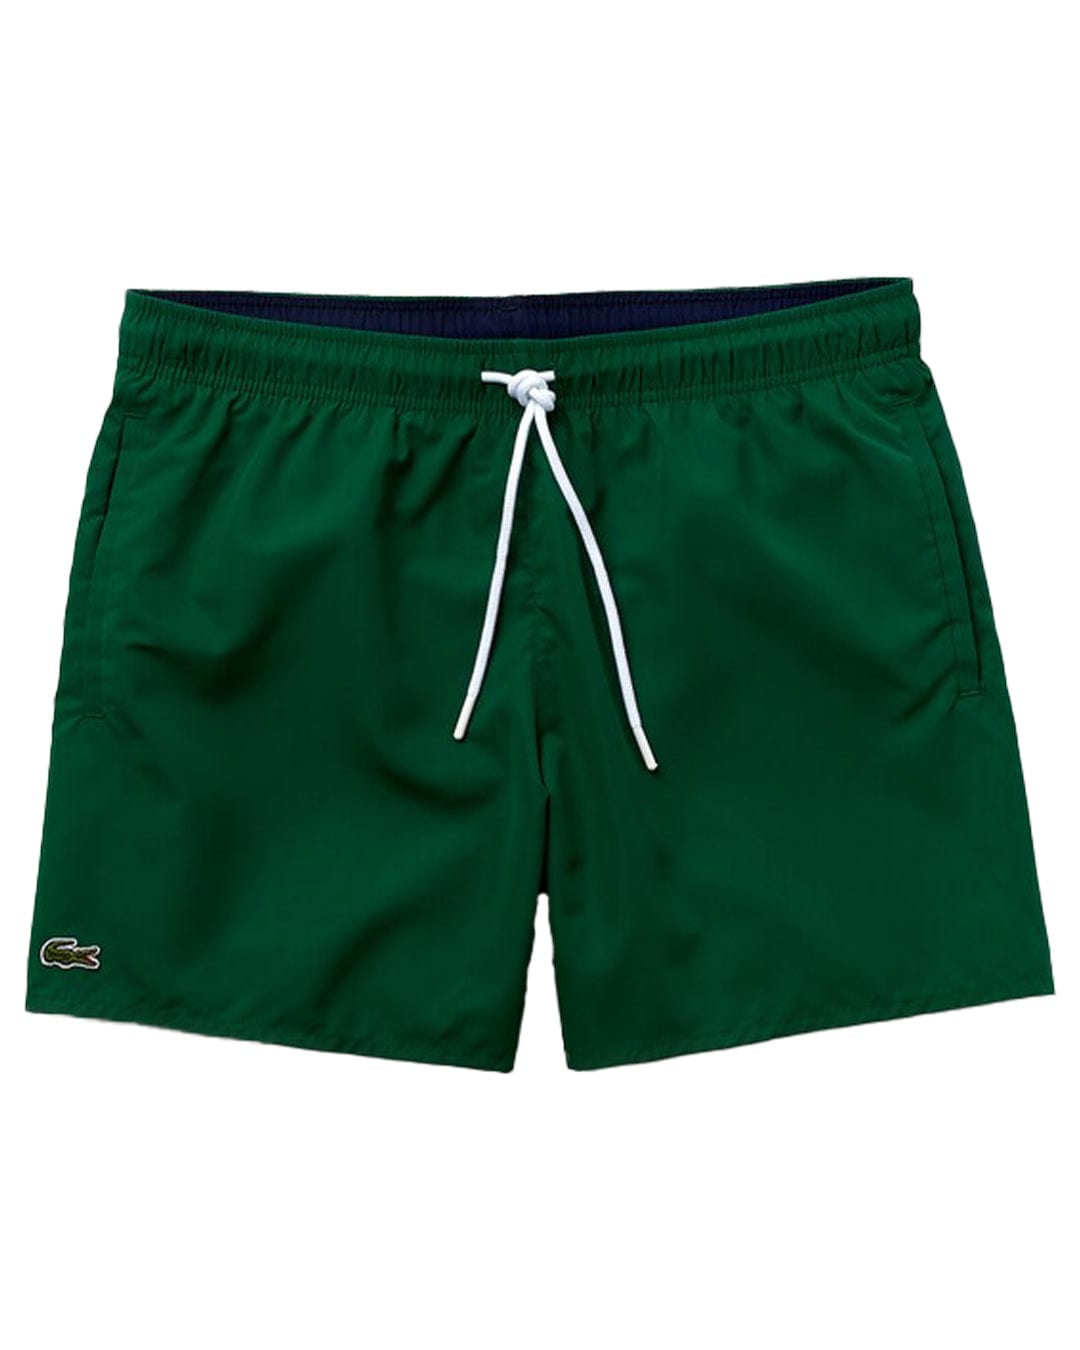 Lacoste Swimwear Lacoste Light Quick-Dry Green Swim Shorts